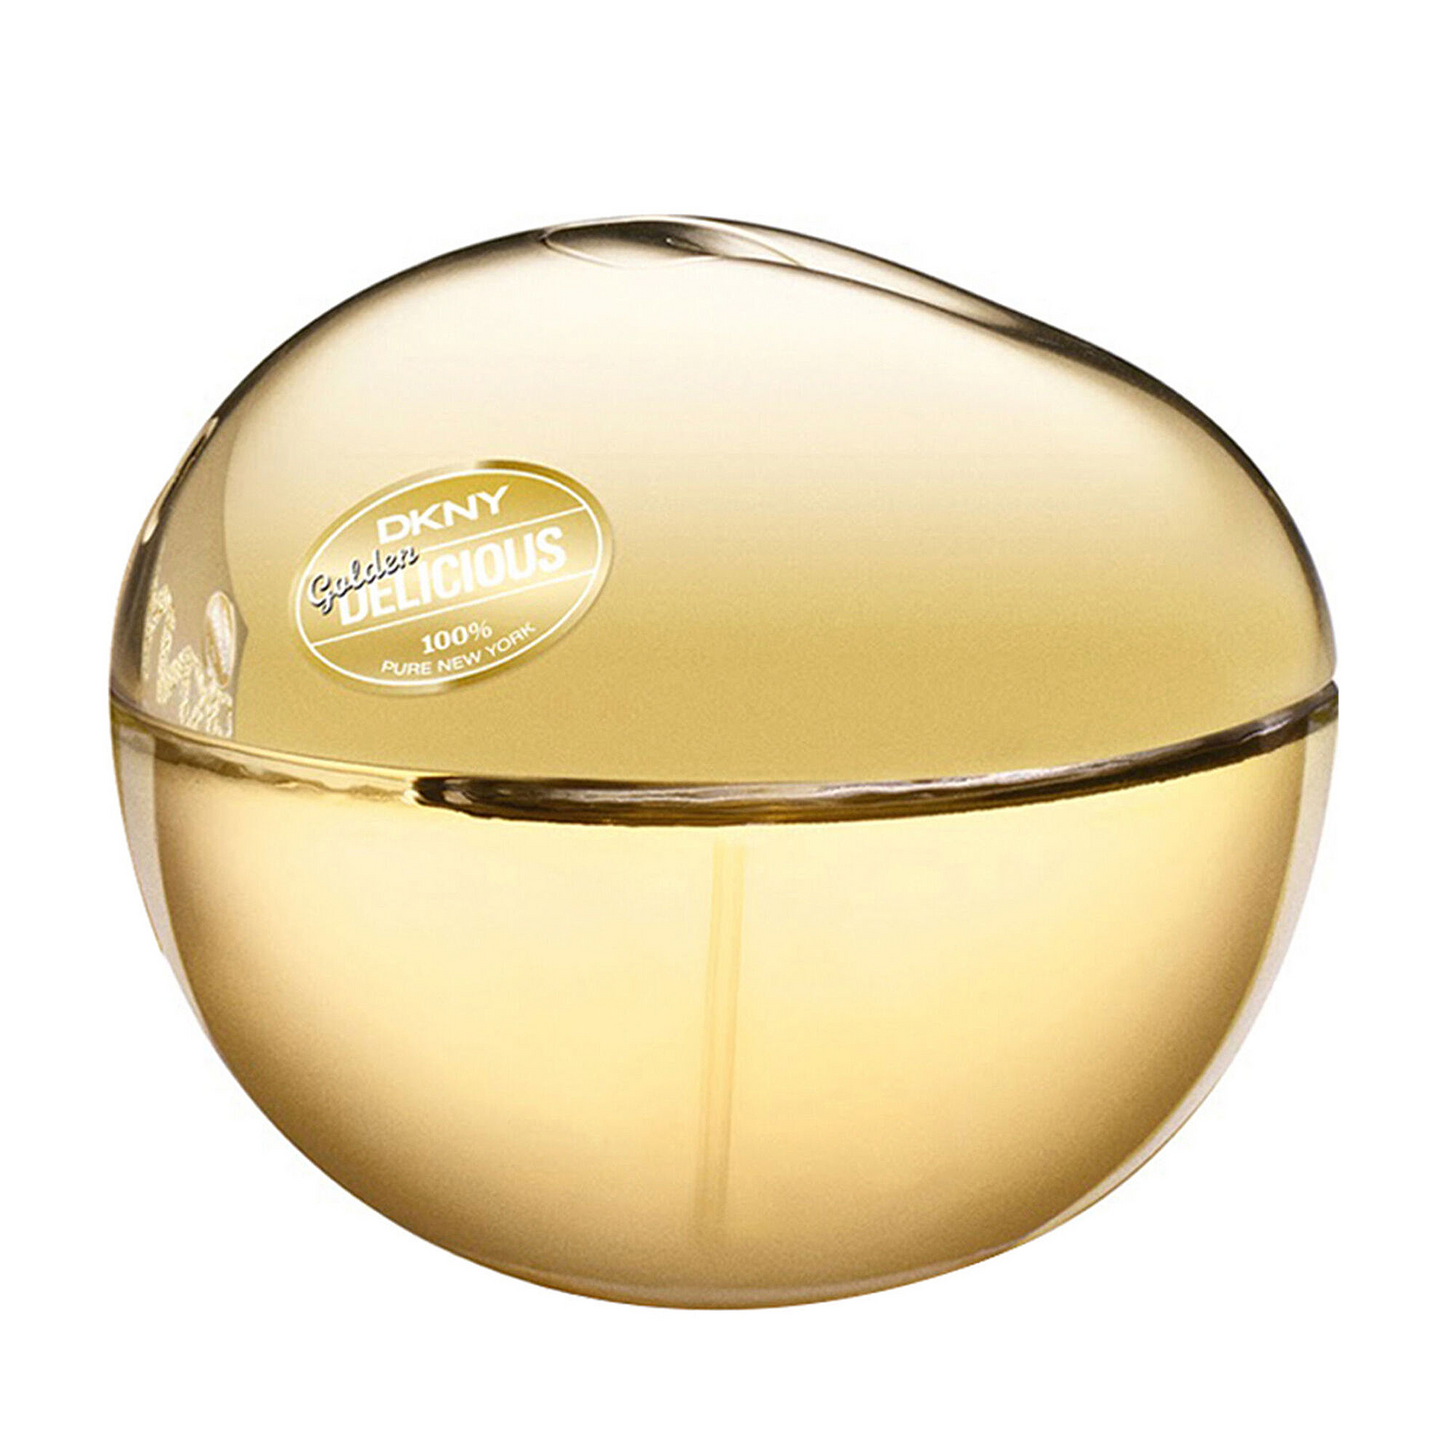 Perfume Golden Delicious Edp Para Mujer 100ml Marca Dkny®